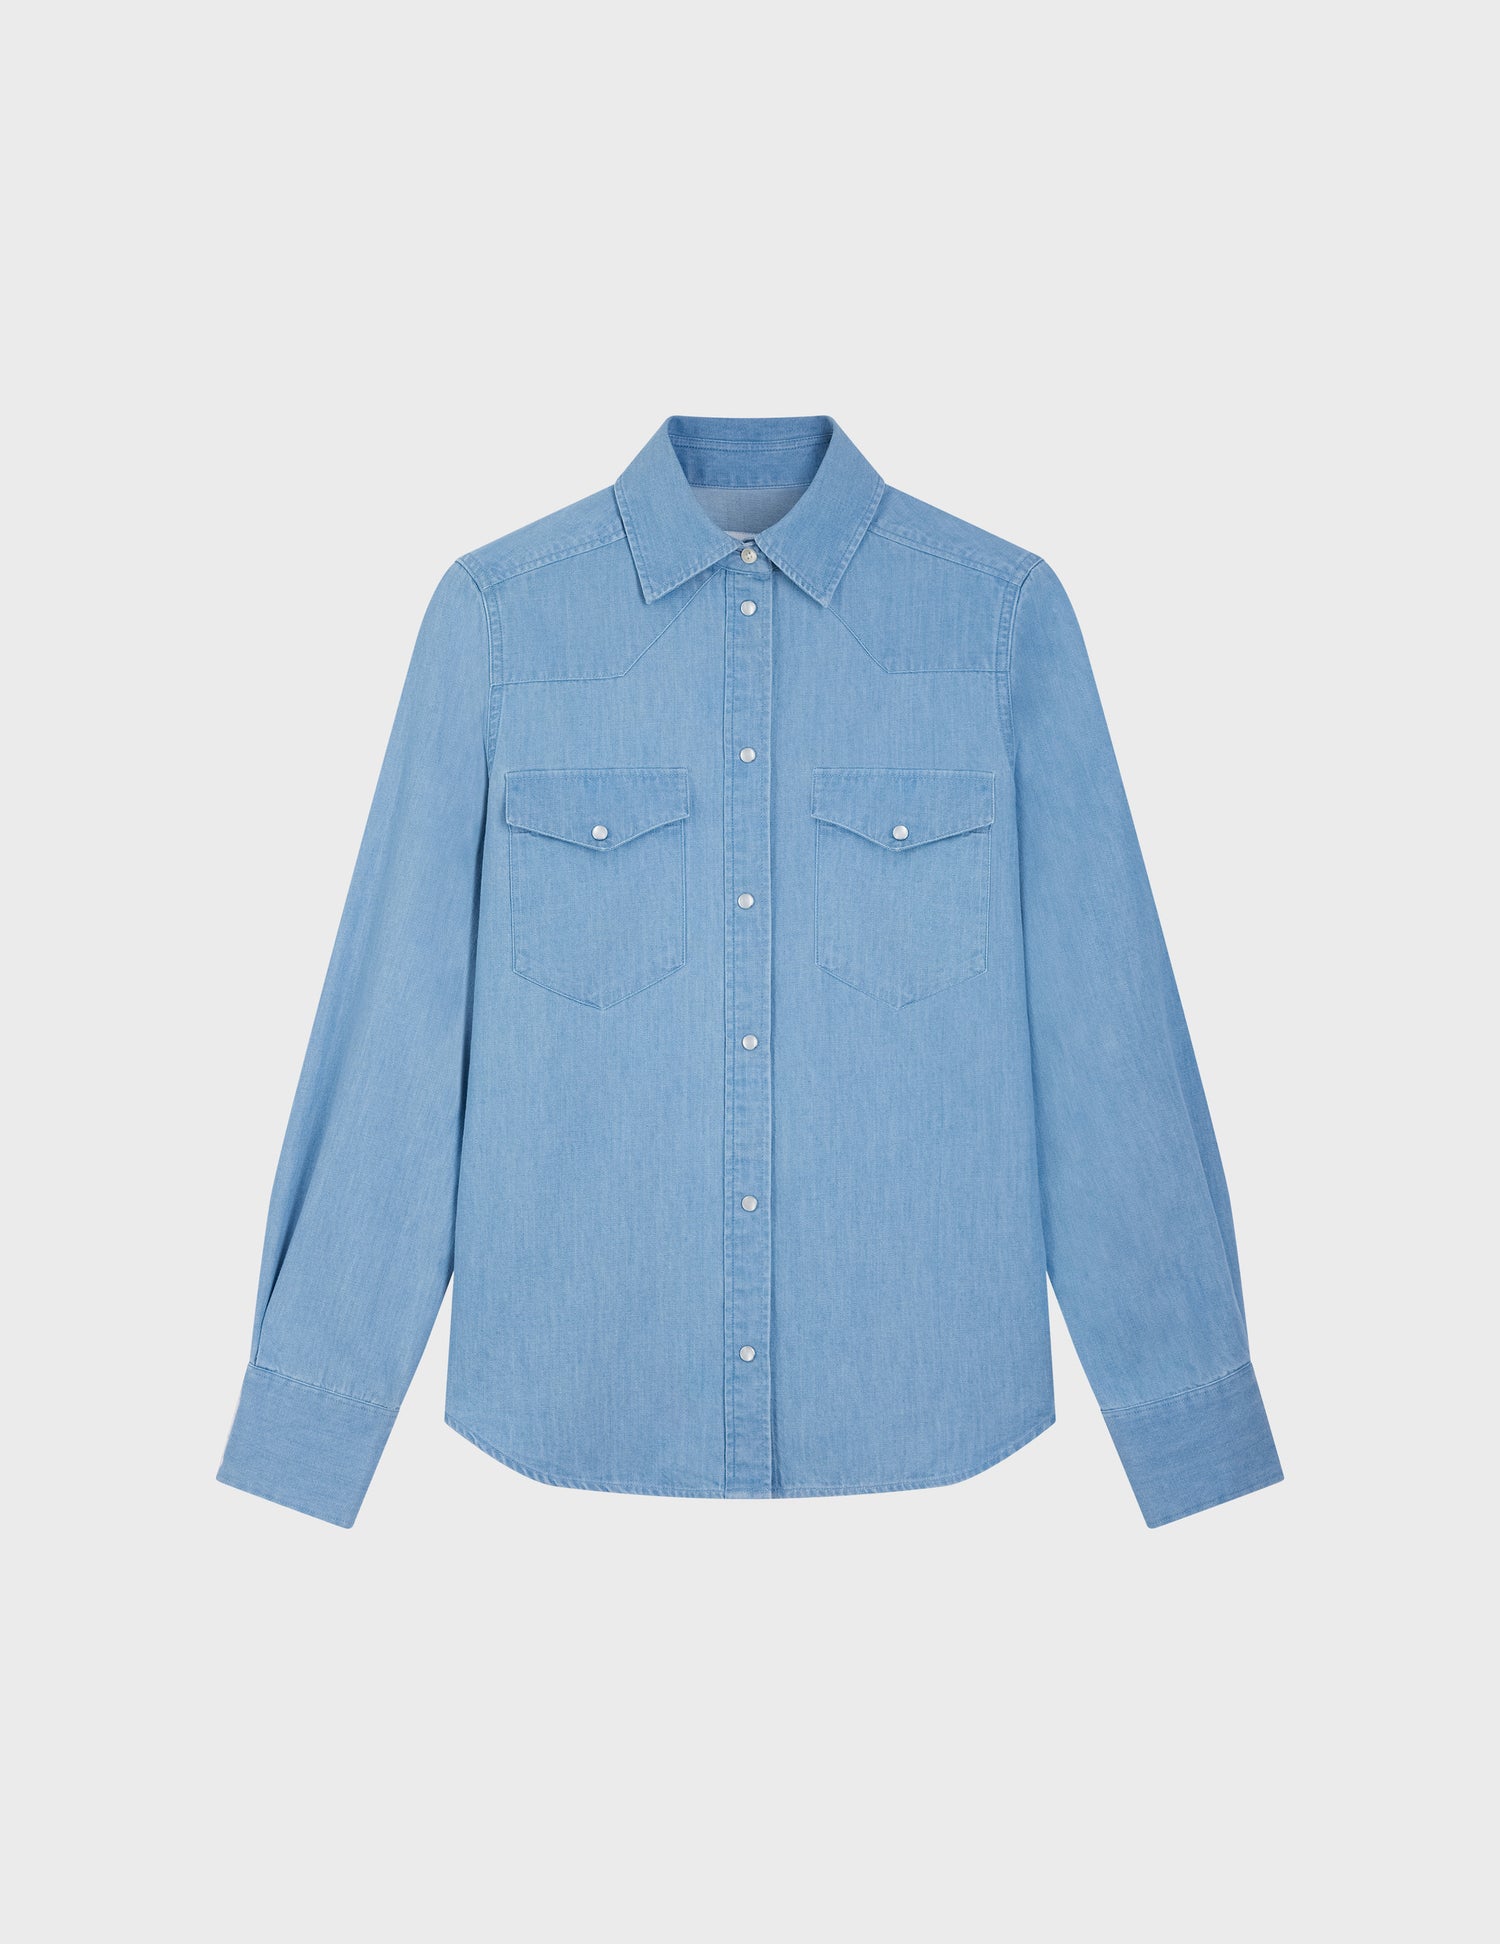 Gisèle shirt in light blue denim - Denim#4